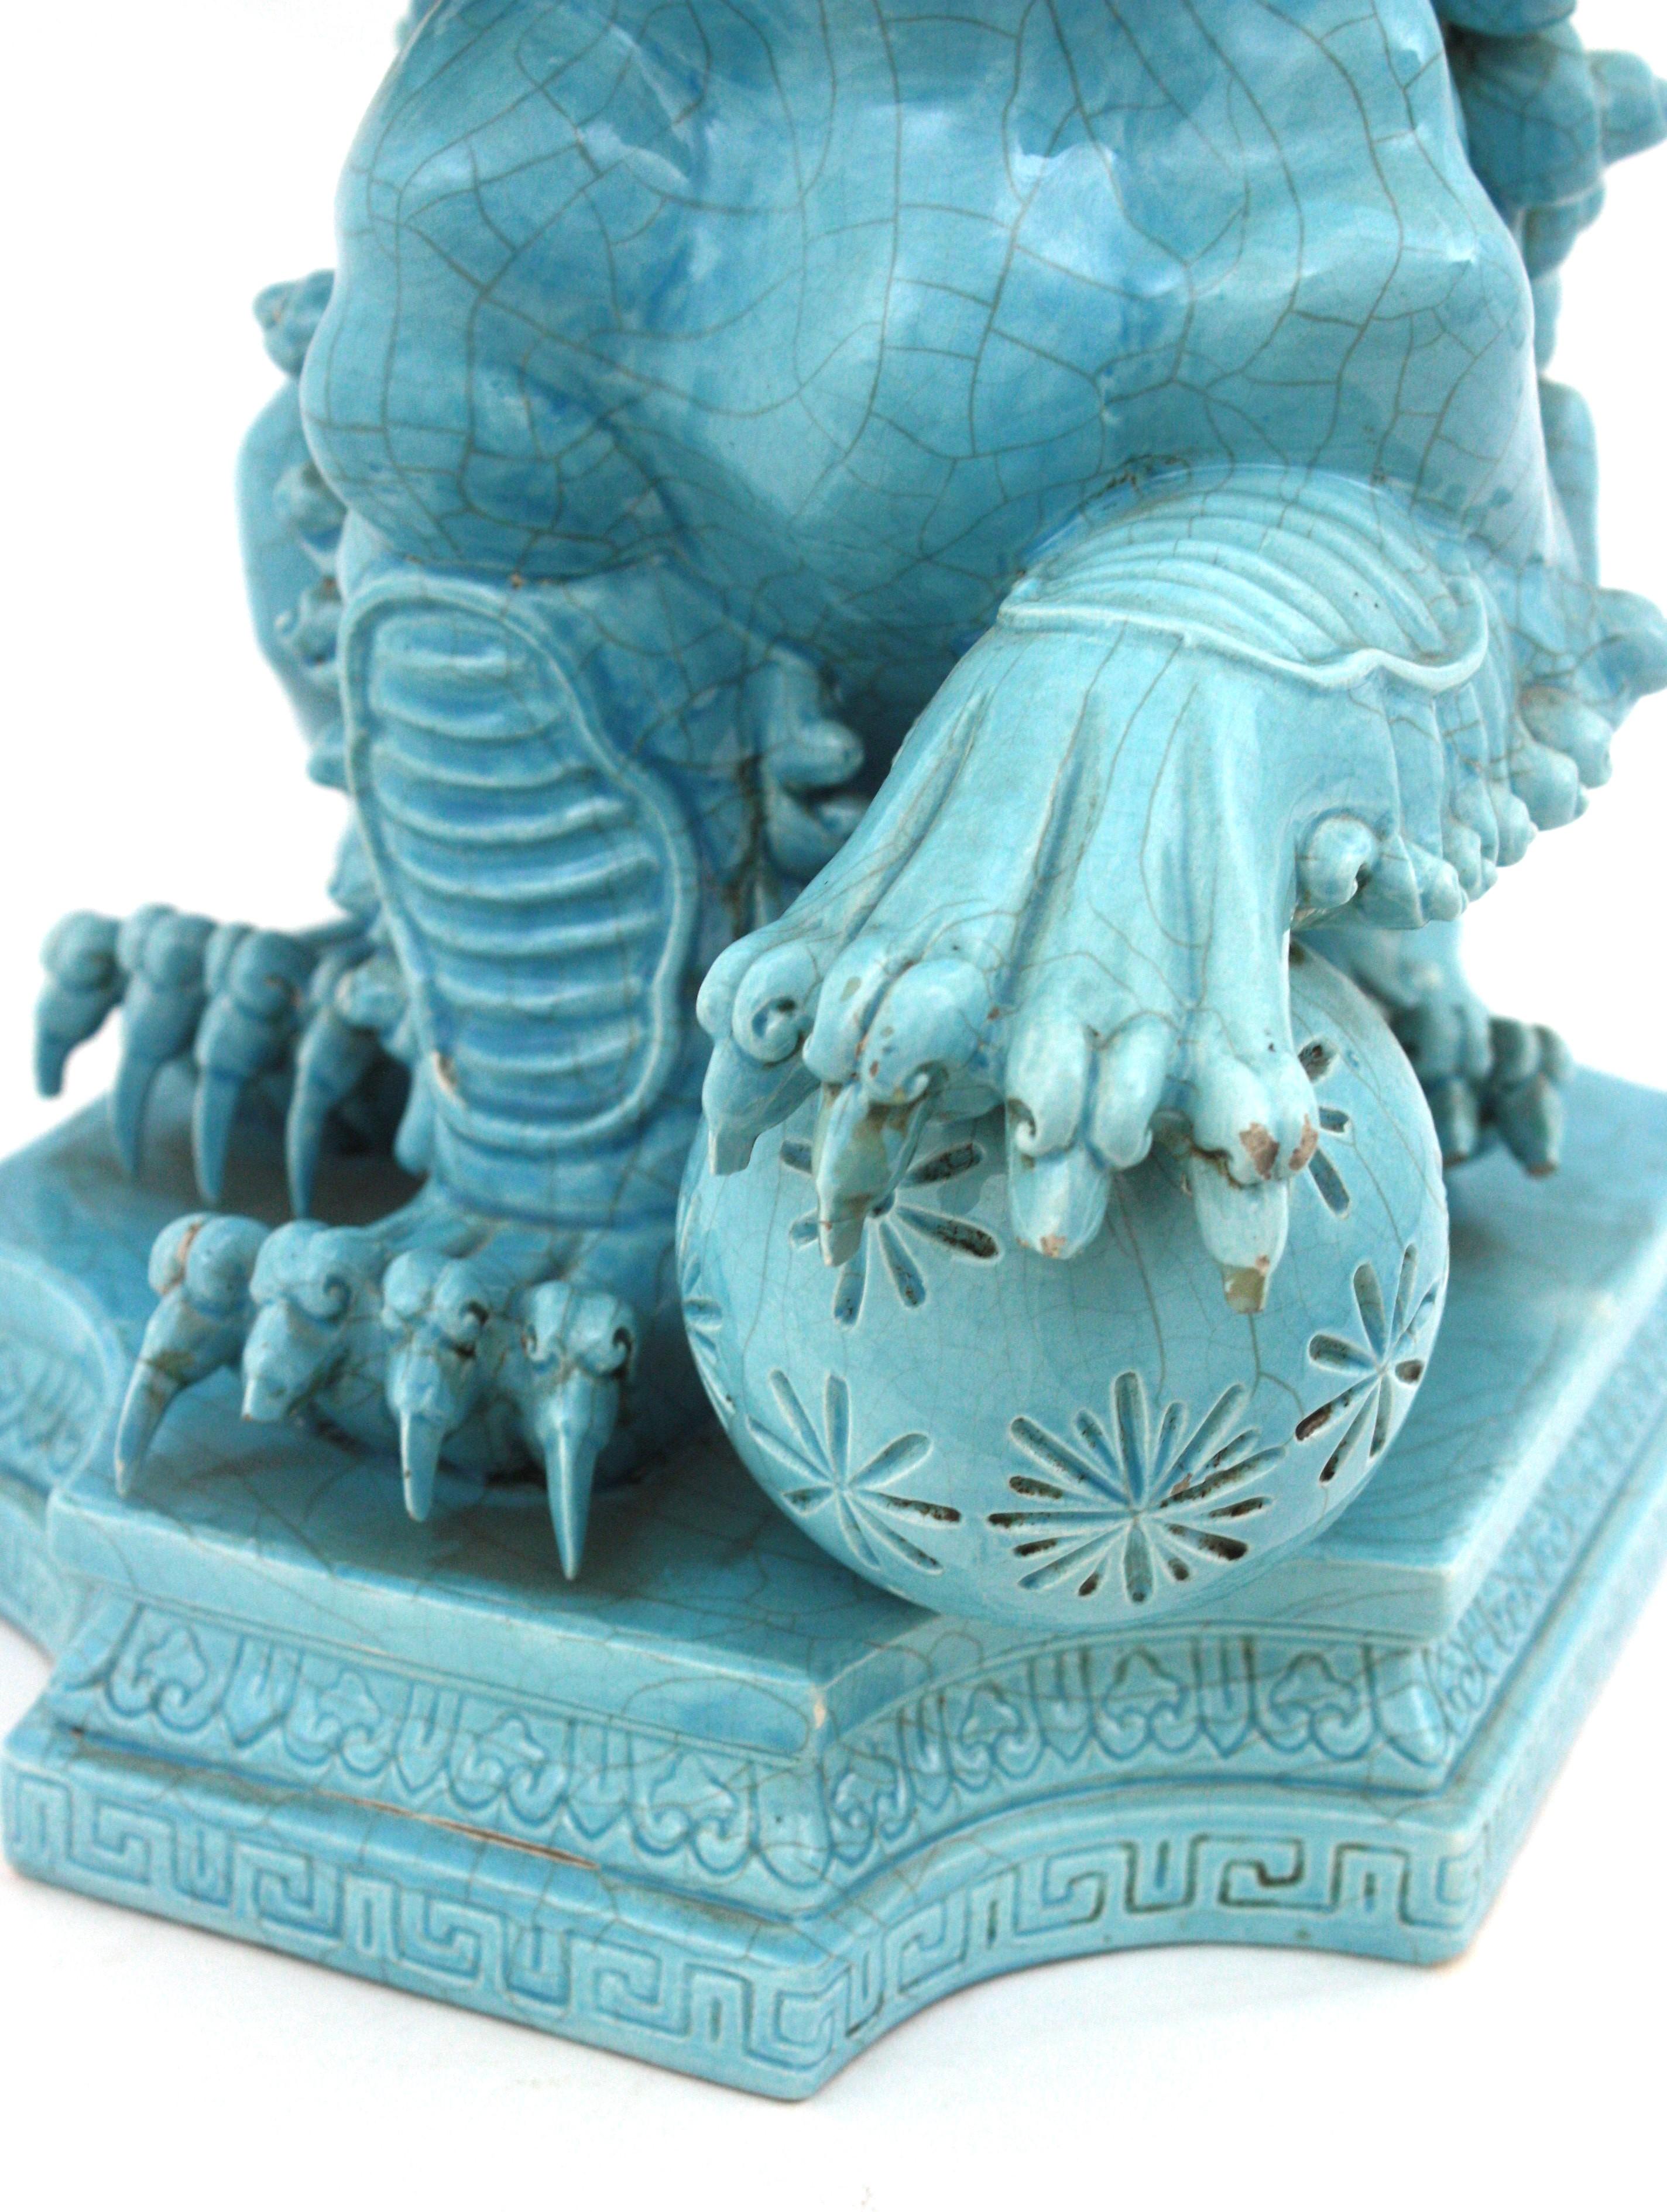 Large Foo Dog Guardian Lion Blue Porcelain Sculpture For Sale 8